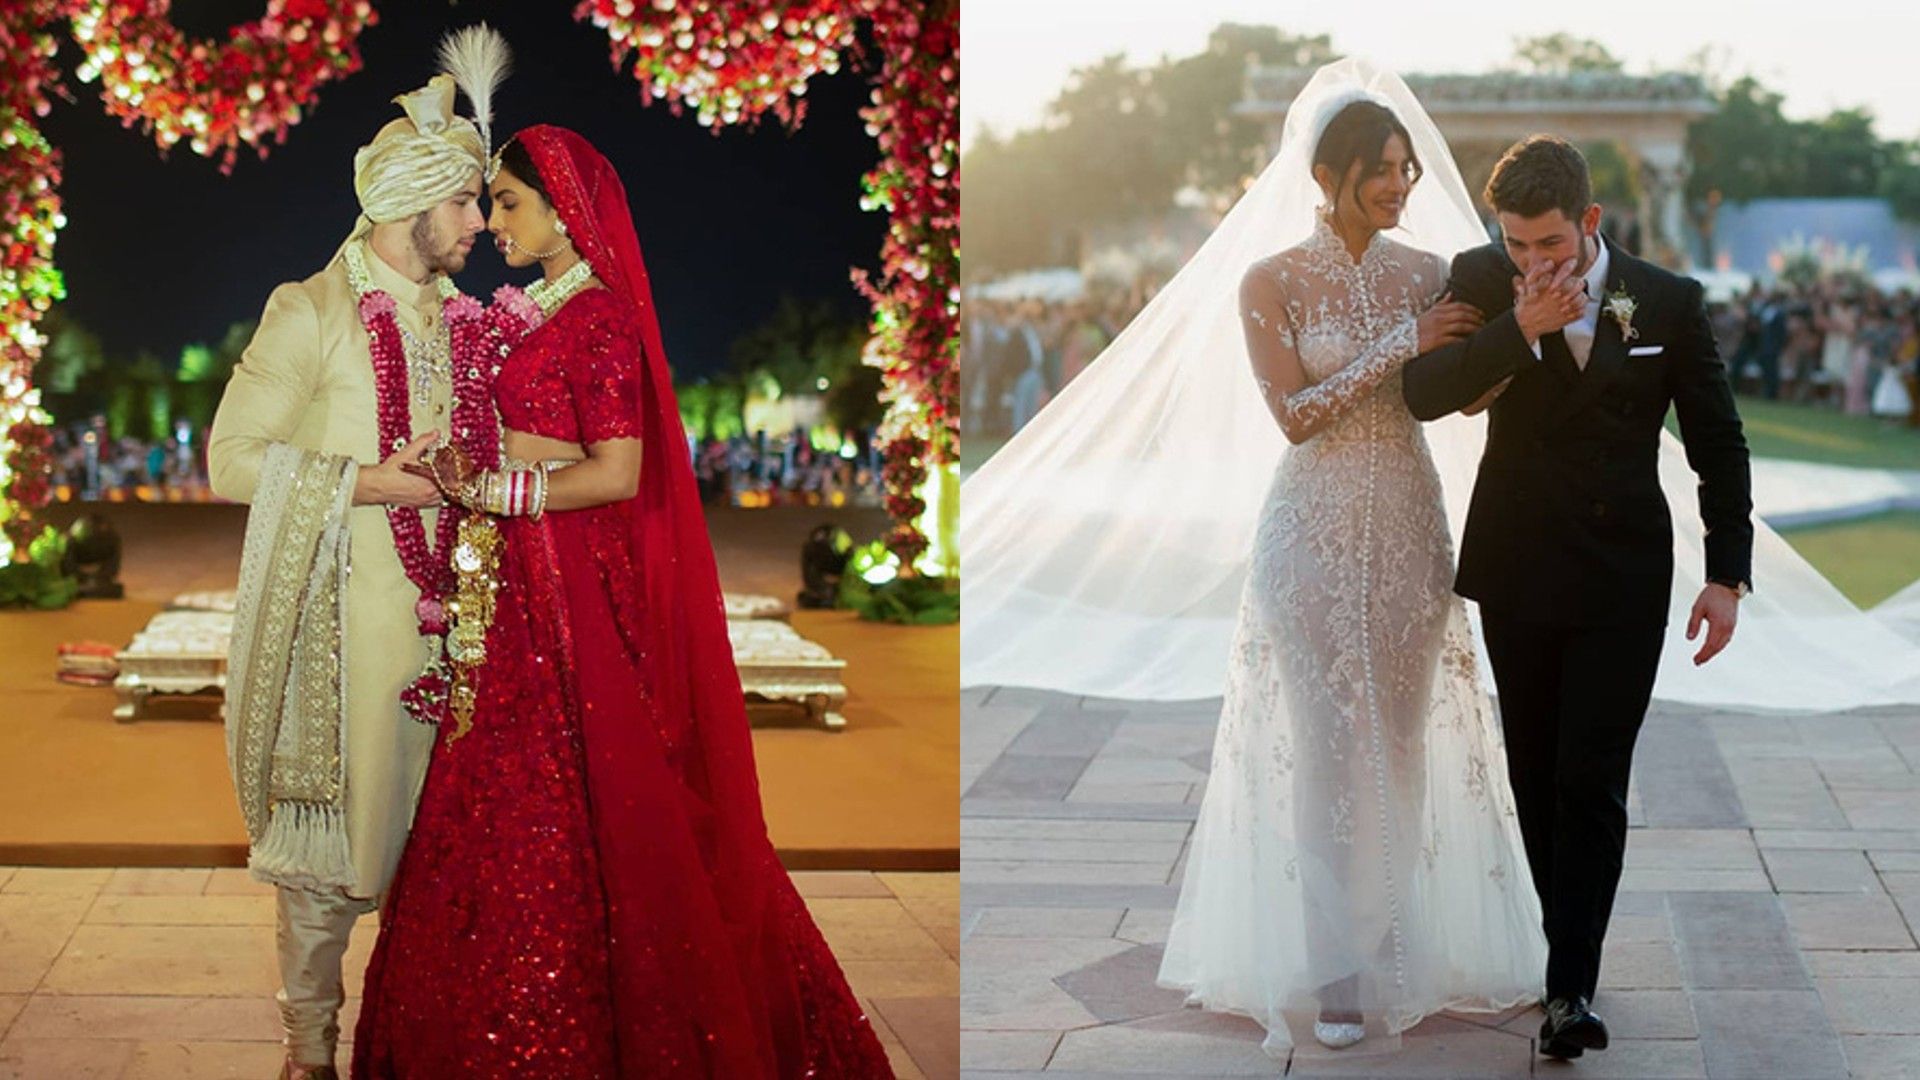 The wedding of Nick Jonas and Priyanka Chopra